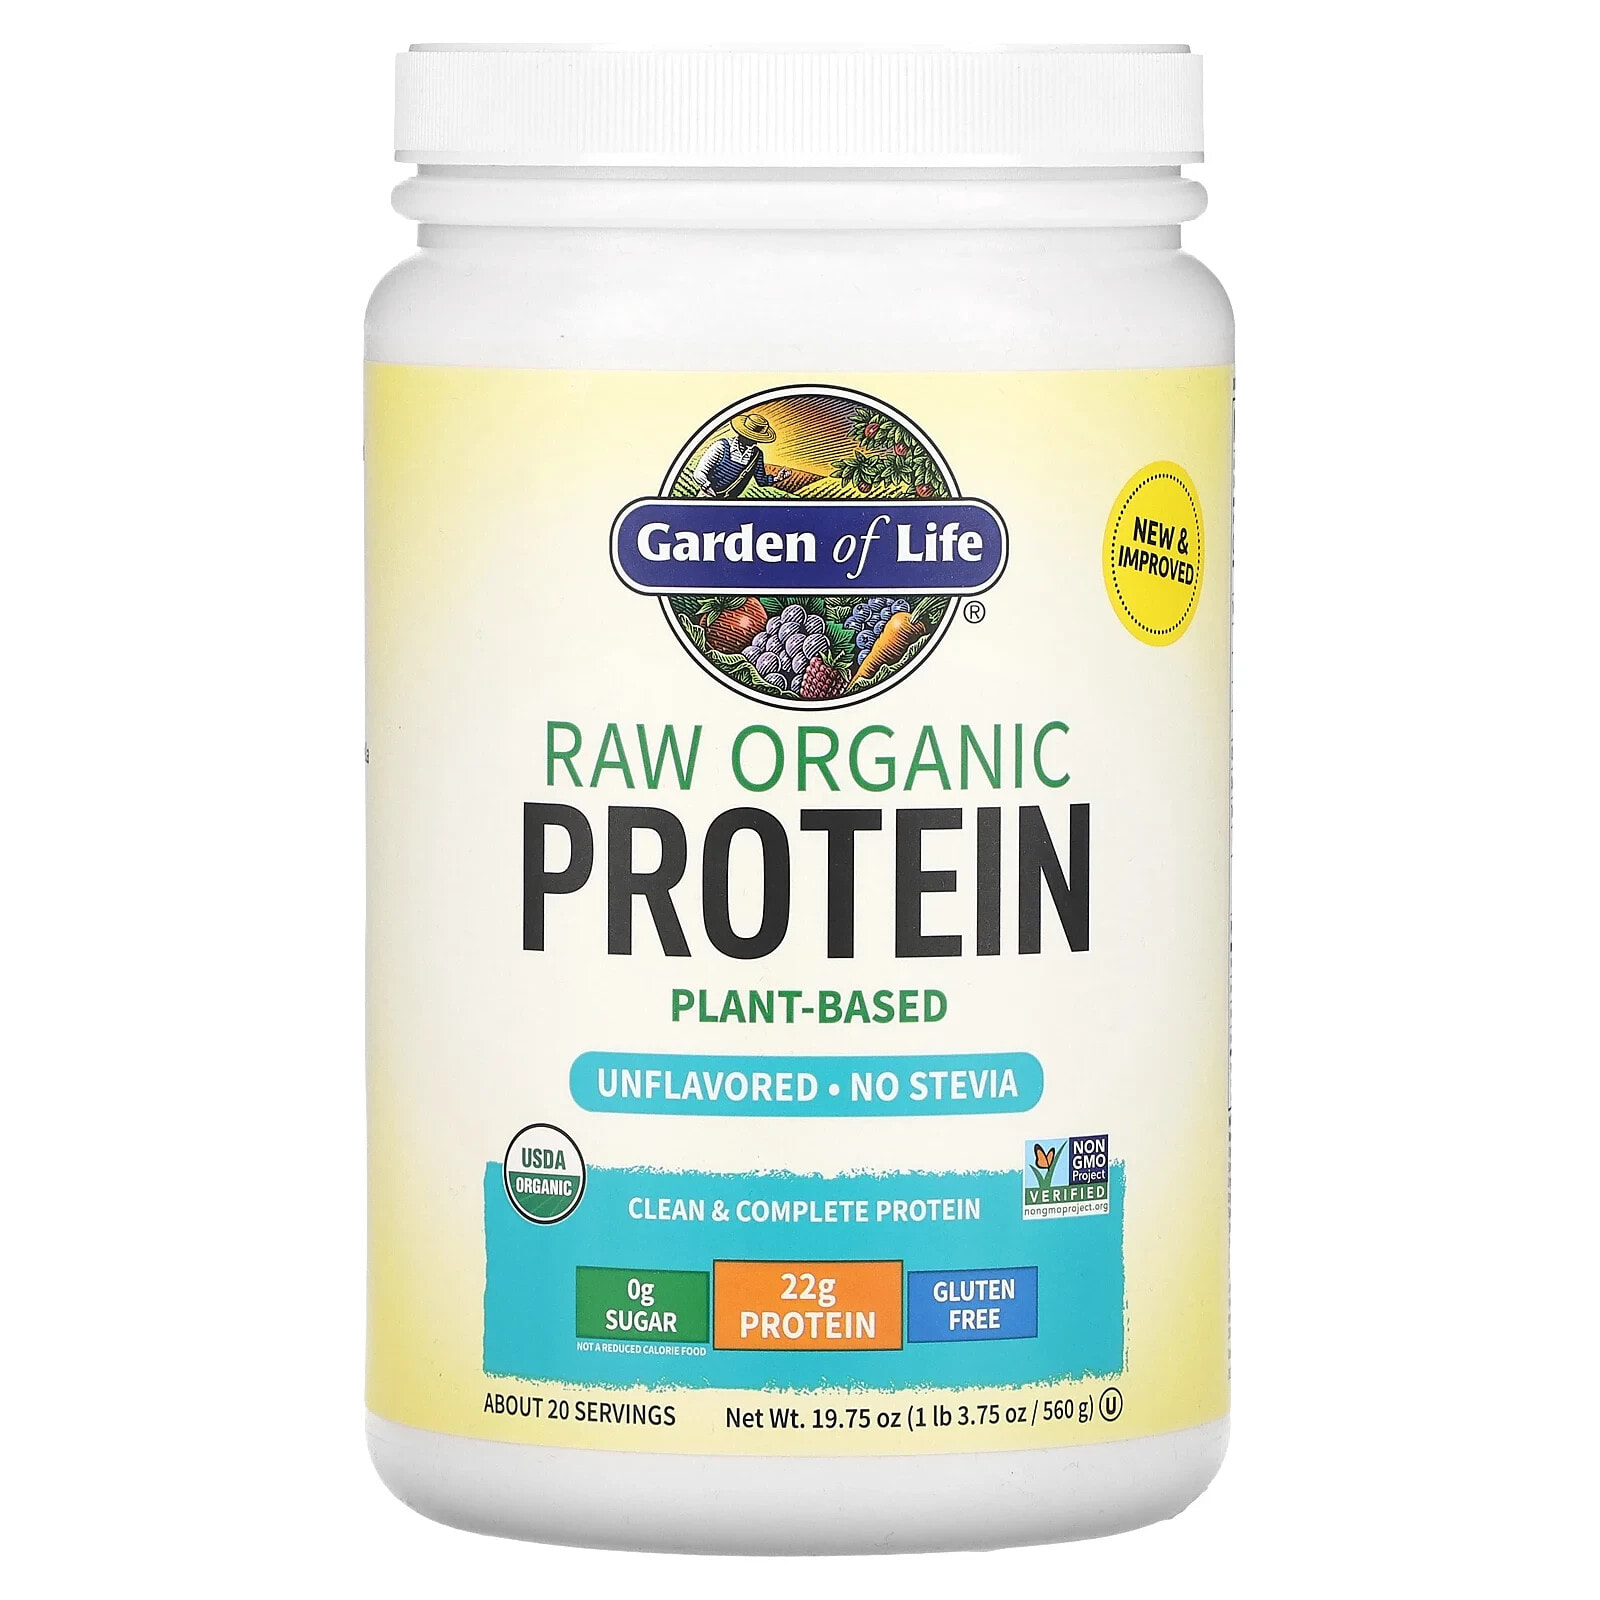 Garden of Life, RAW Organic Protein, Organic Plant Formula, Vanilla Chai, 16 lbs 4.45 oz (580 g)